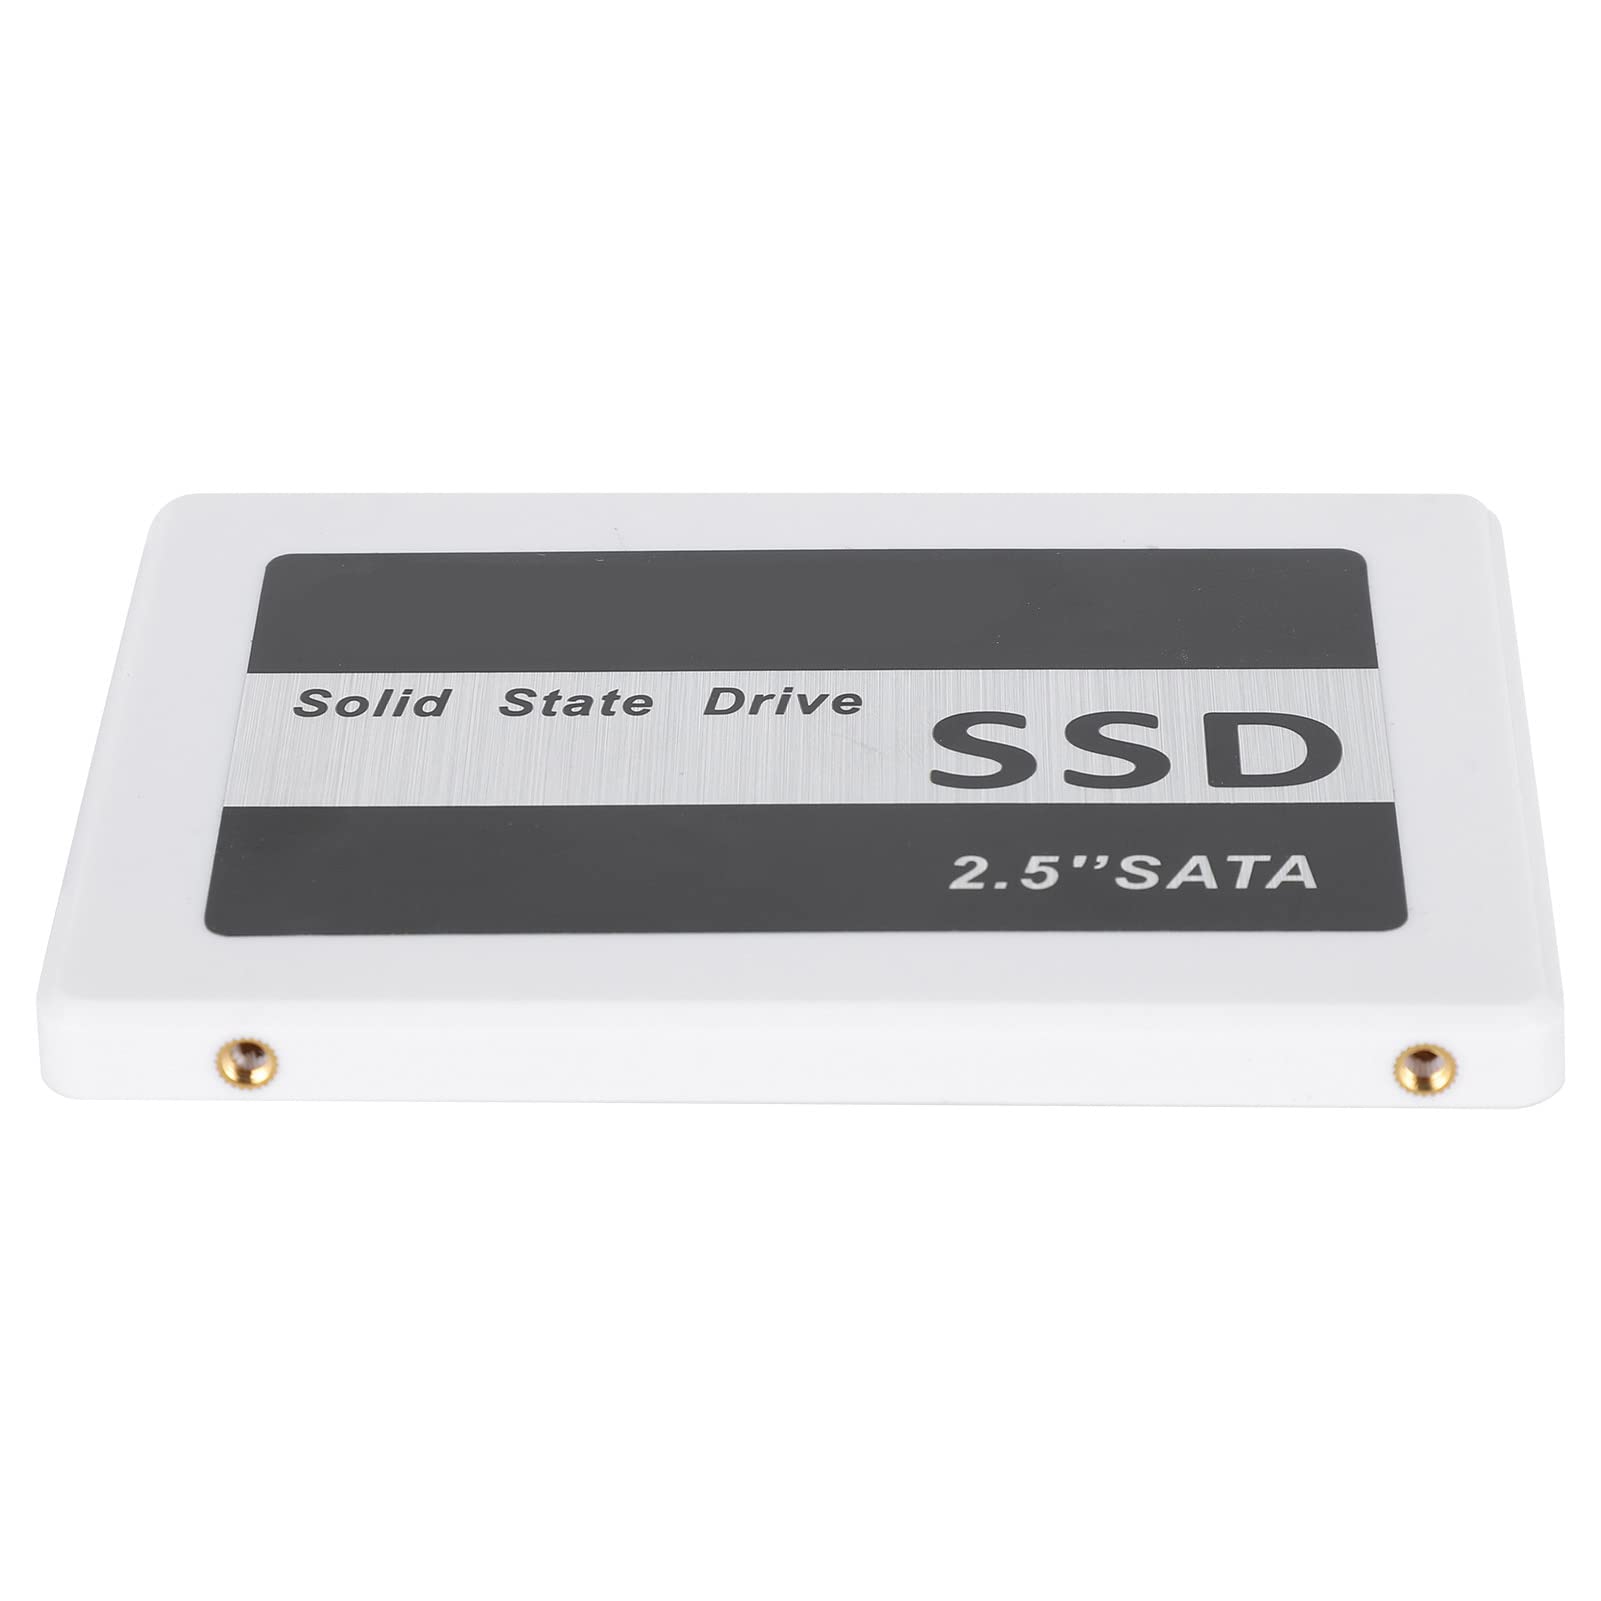 SSD capacity image